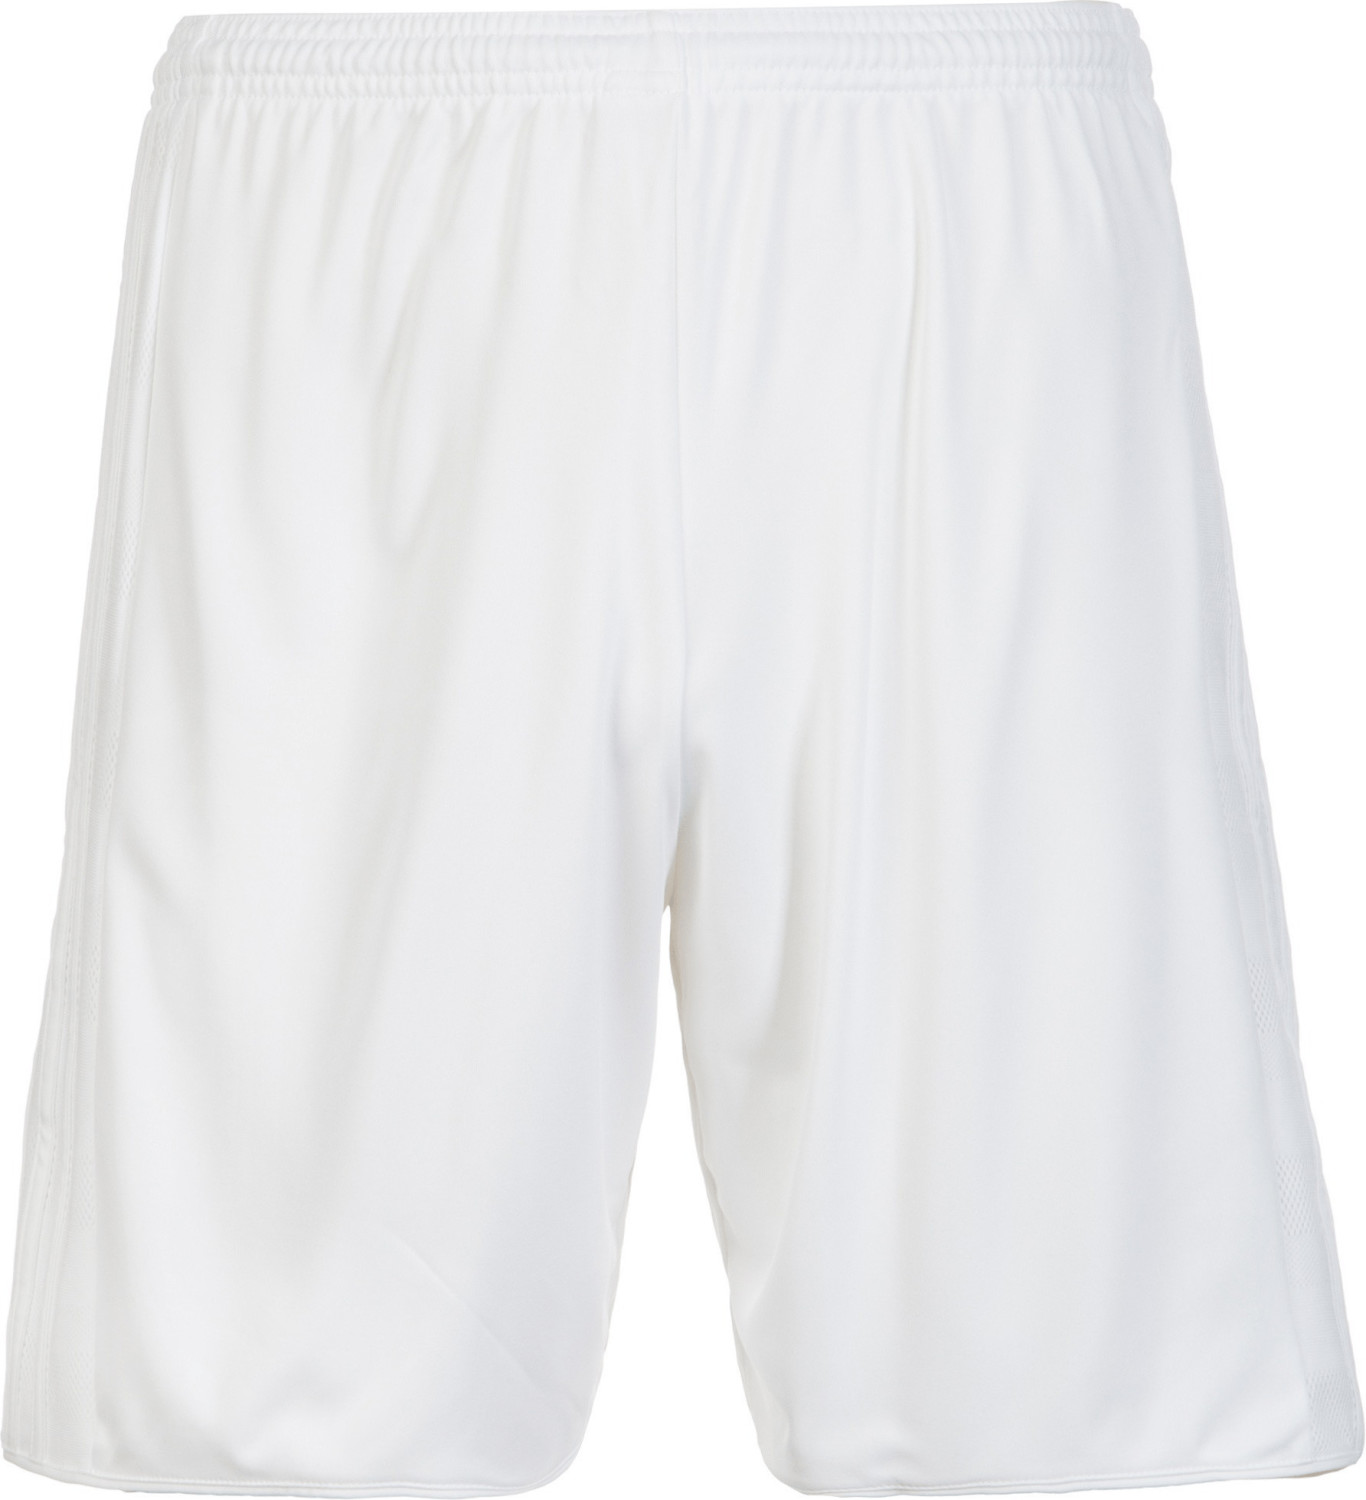 Adidas Tastigo 17 Shorts white